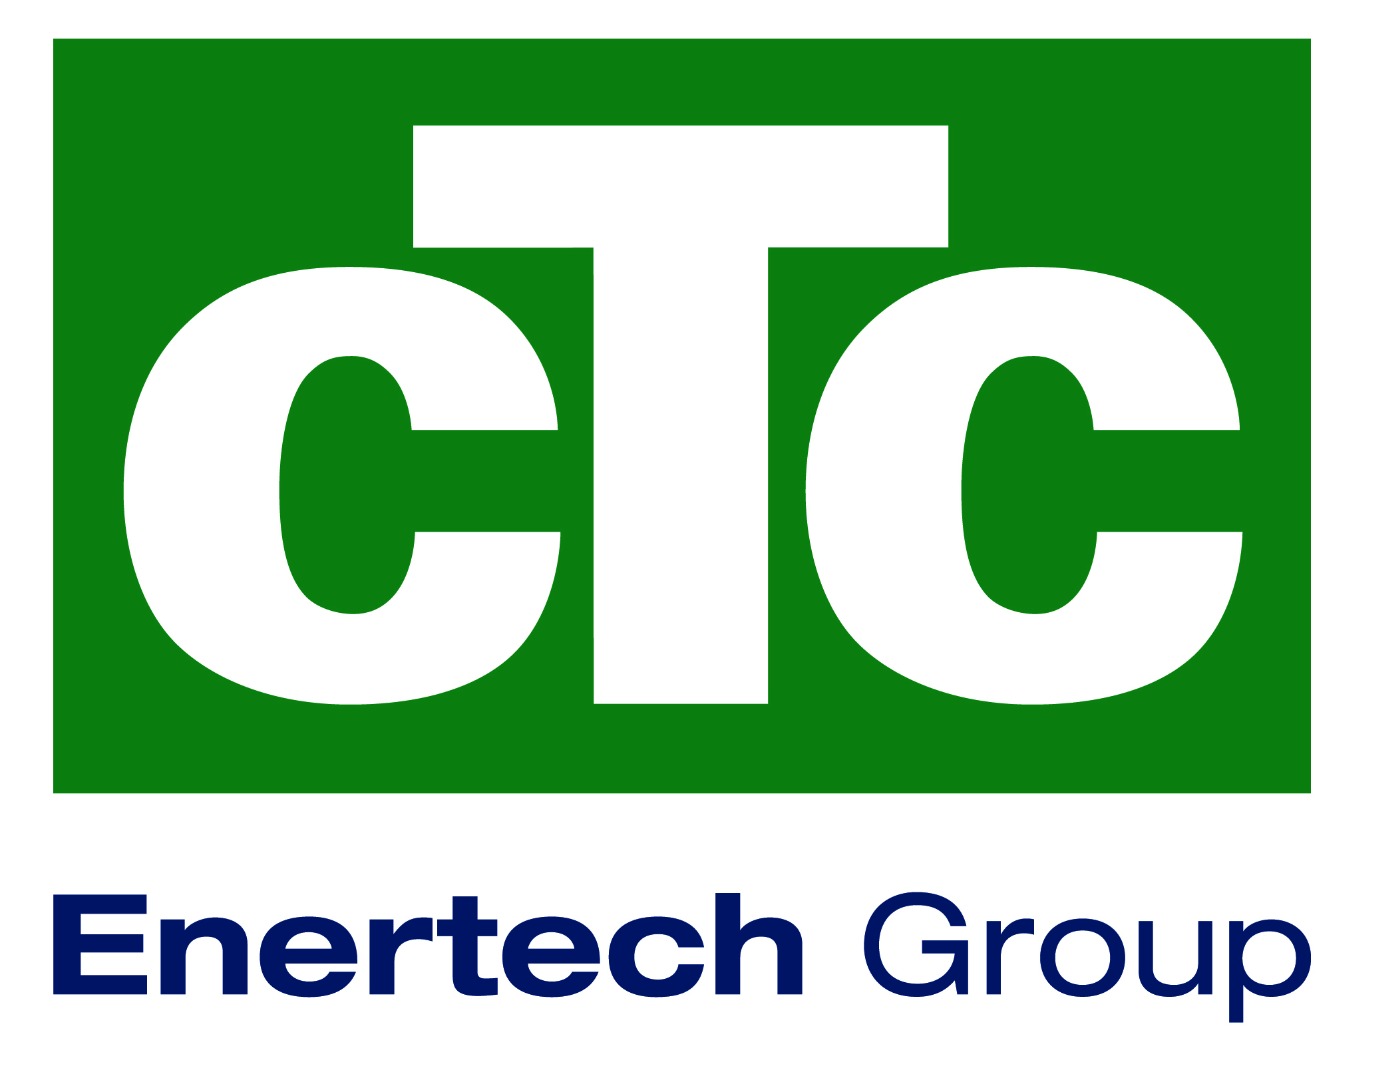 CTC Benelux (Enertech Group)